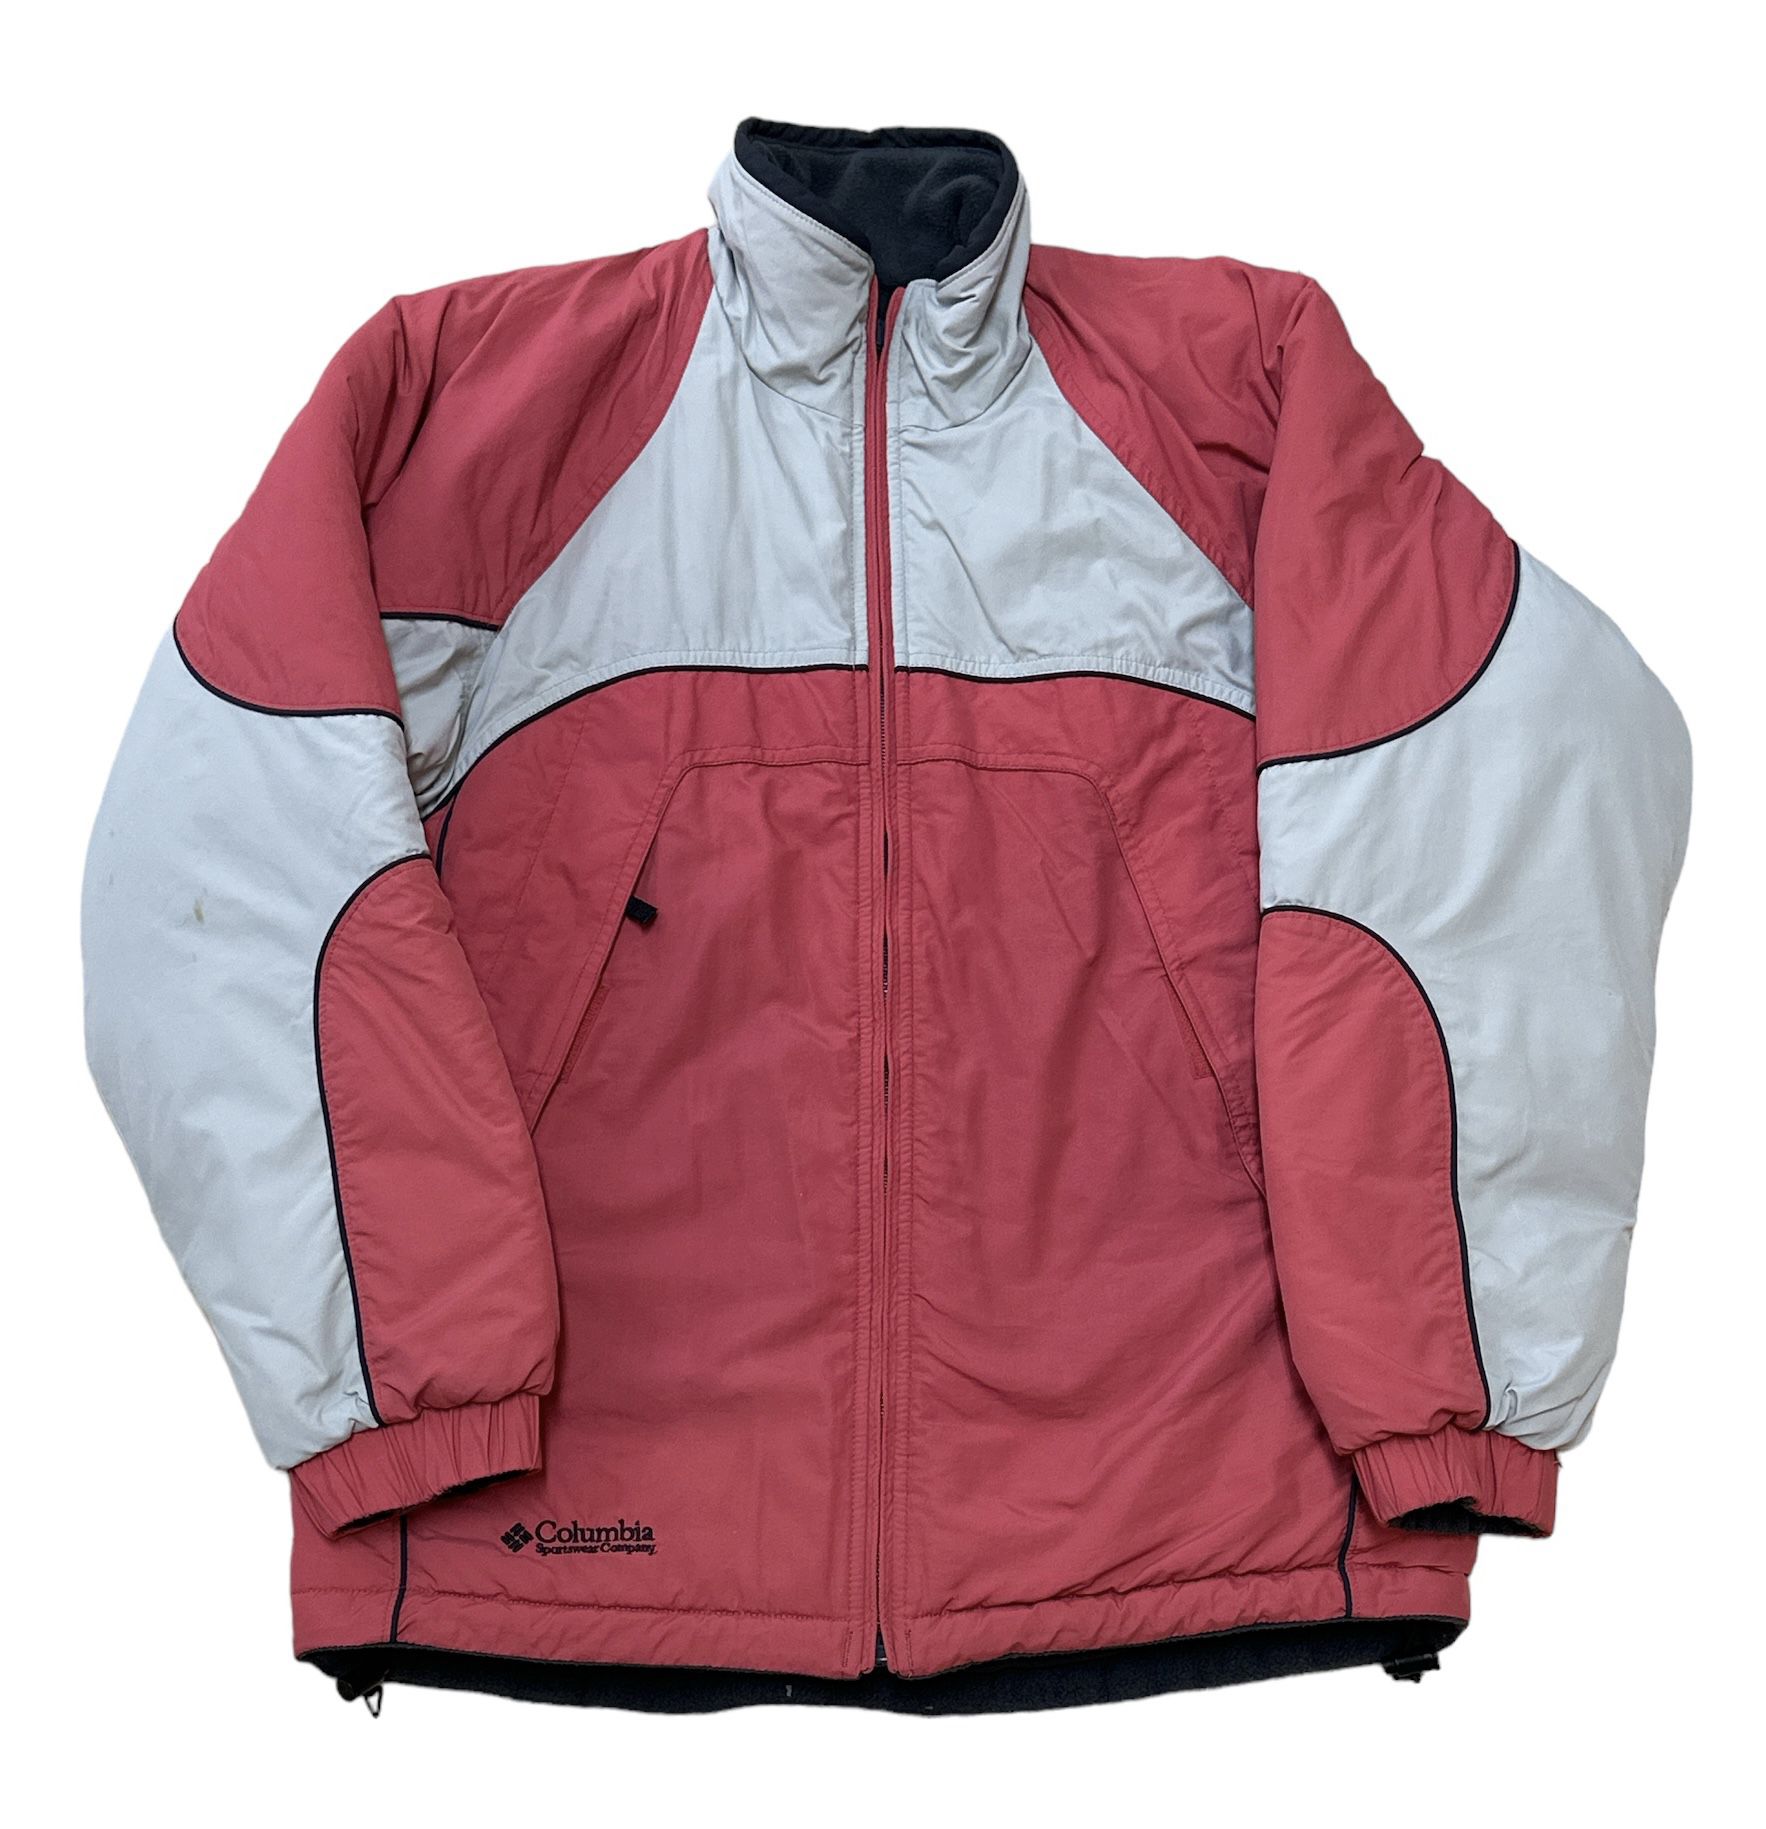 Columbia Women’s Pink Gray Colorblock Puffer Jacket Size XL